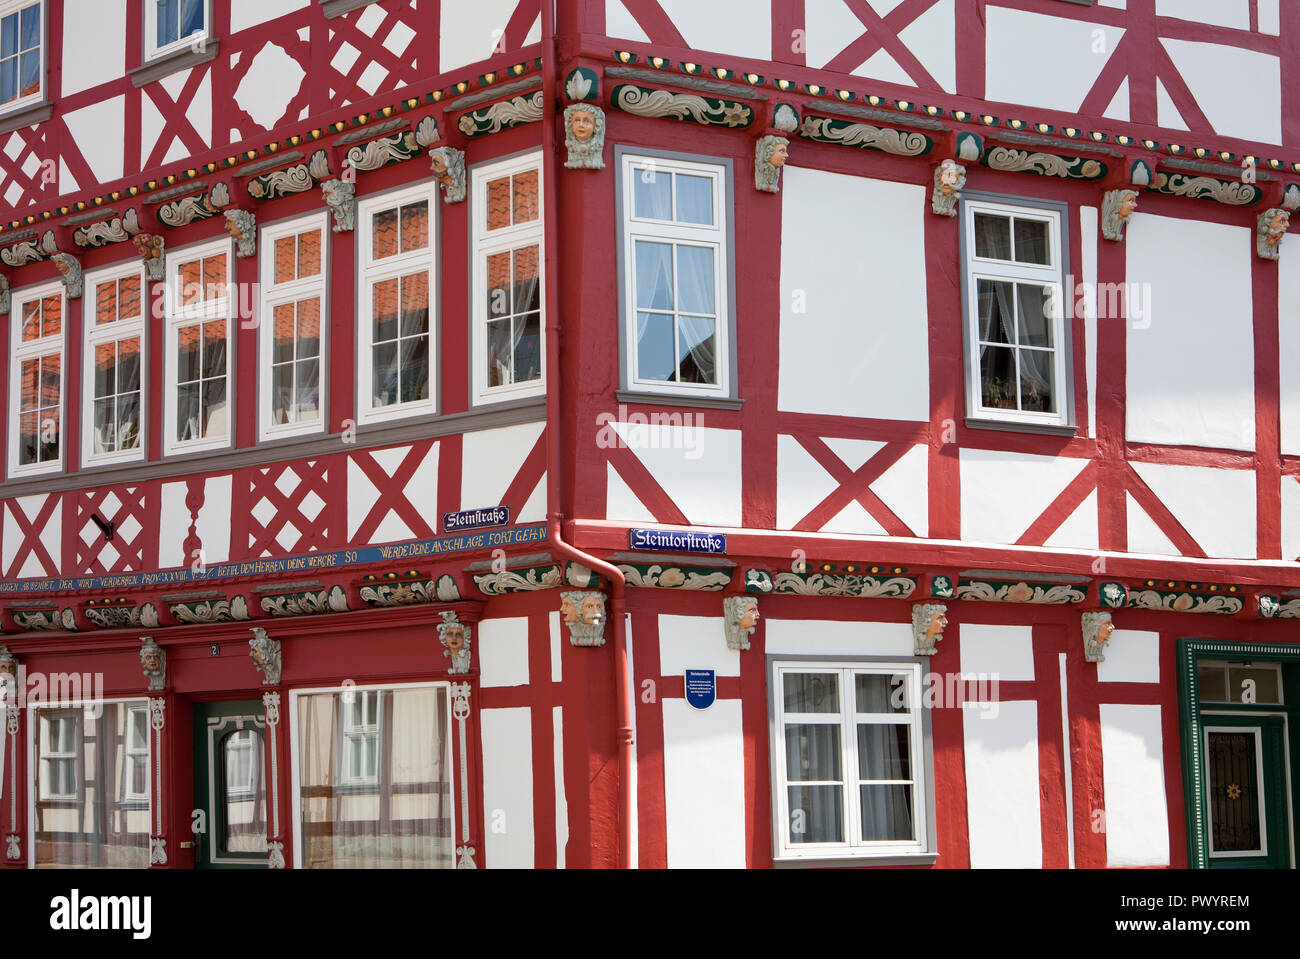 Maisons à colombages, Duderstadt, Basse-Saxe, Allemagne, Europe Banque D'Images